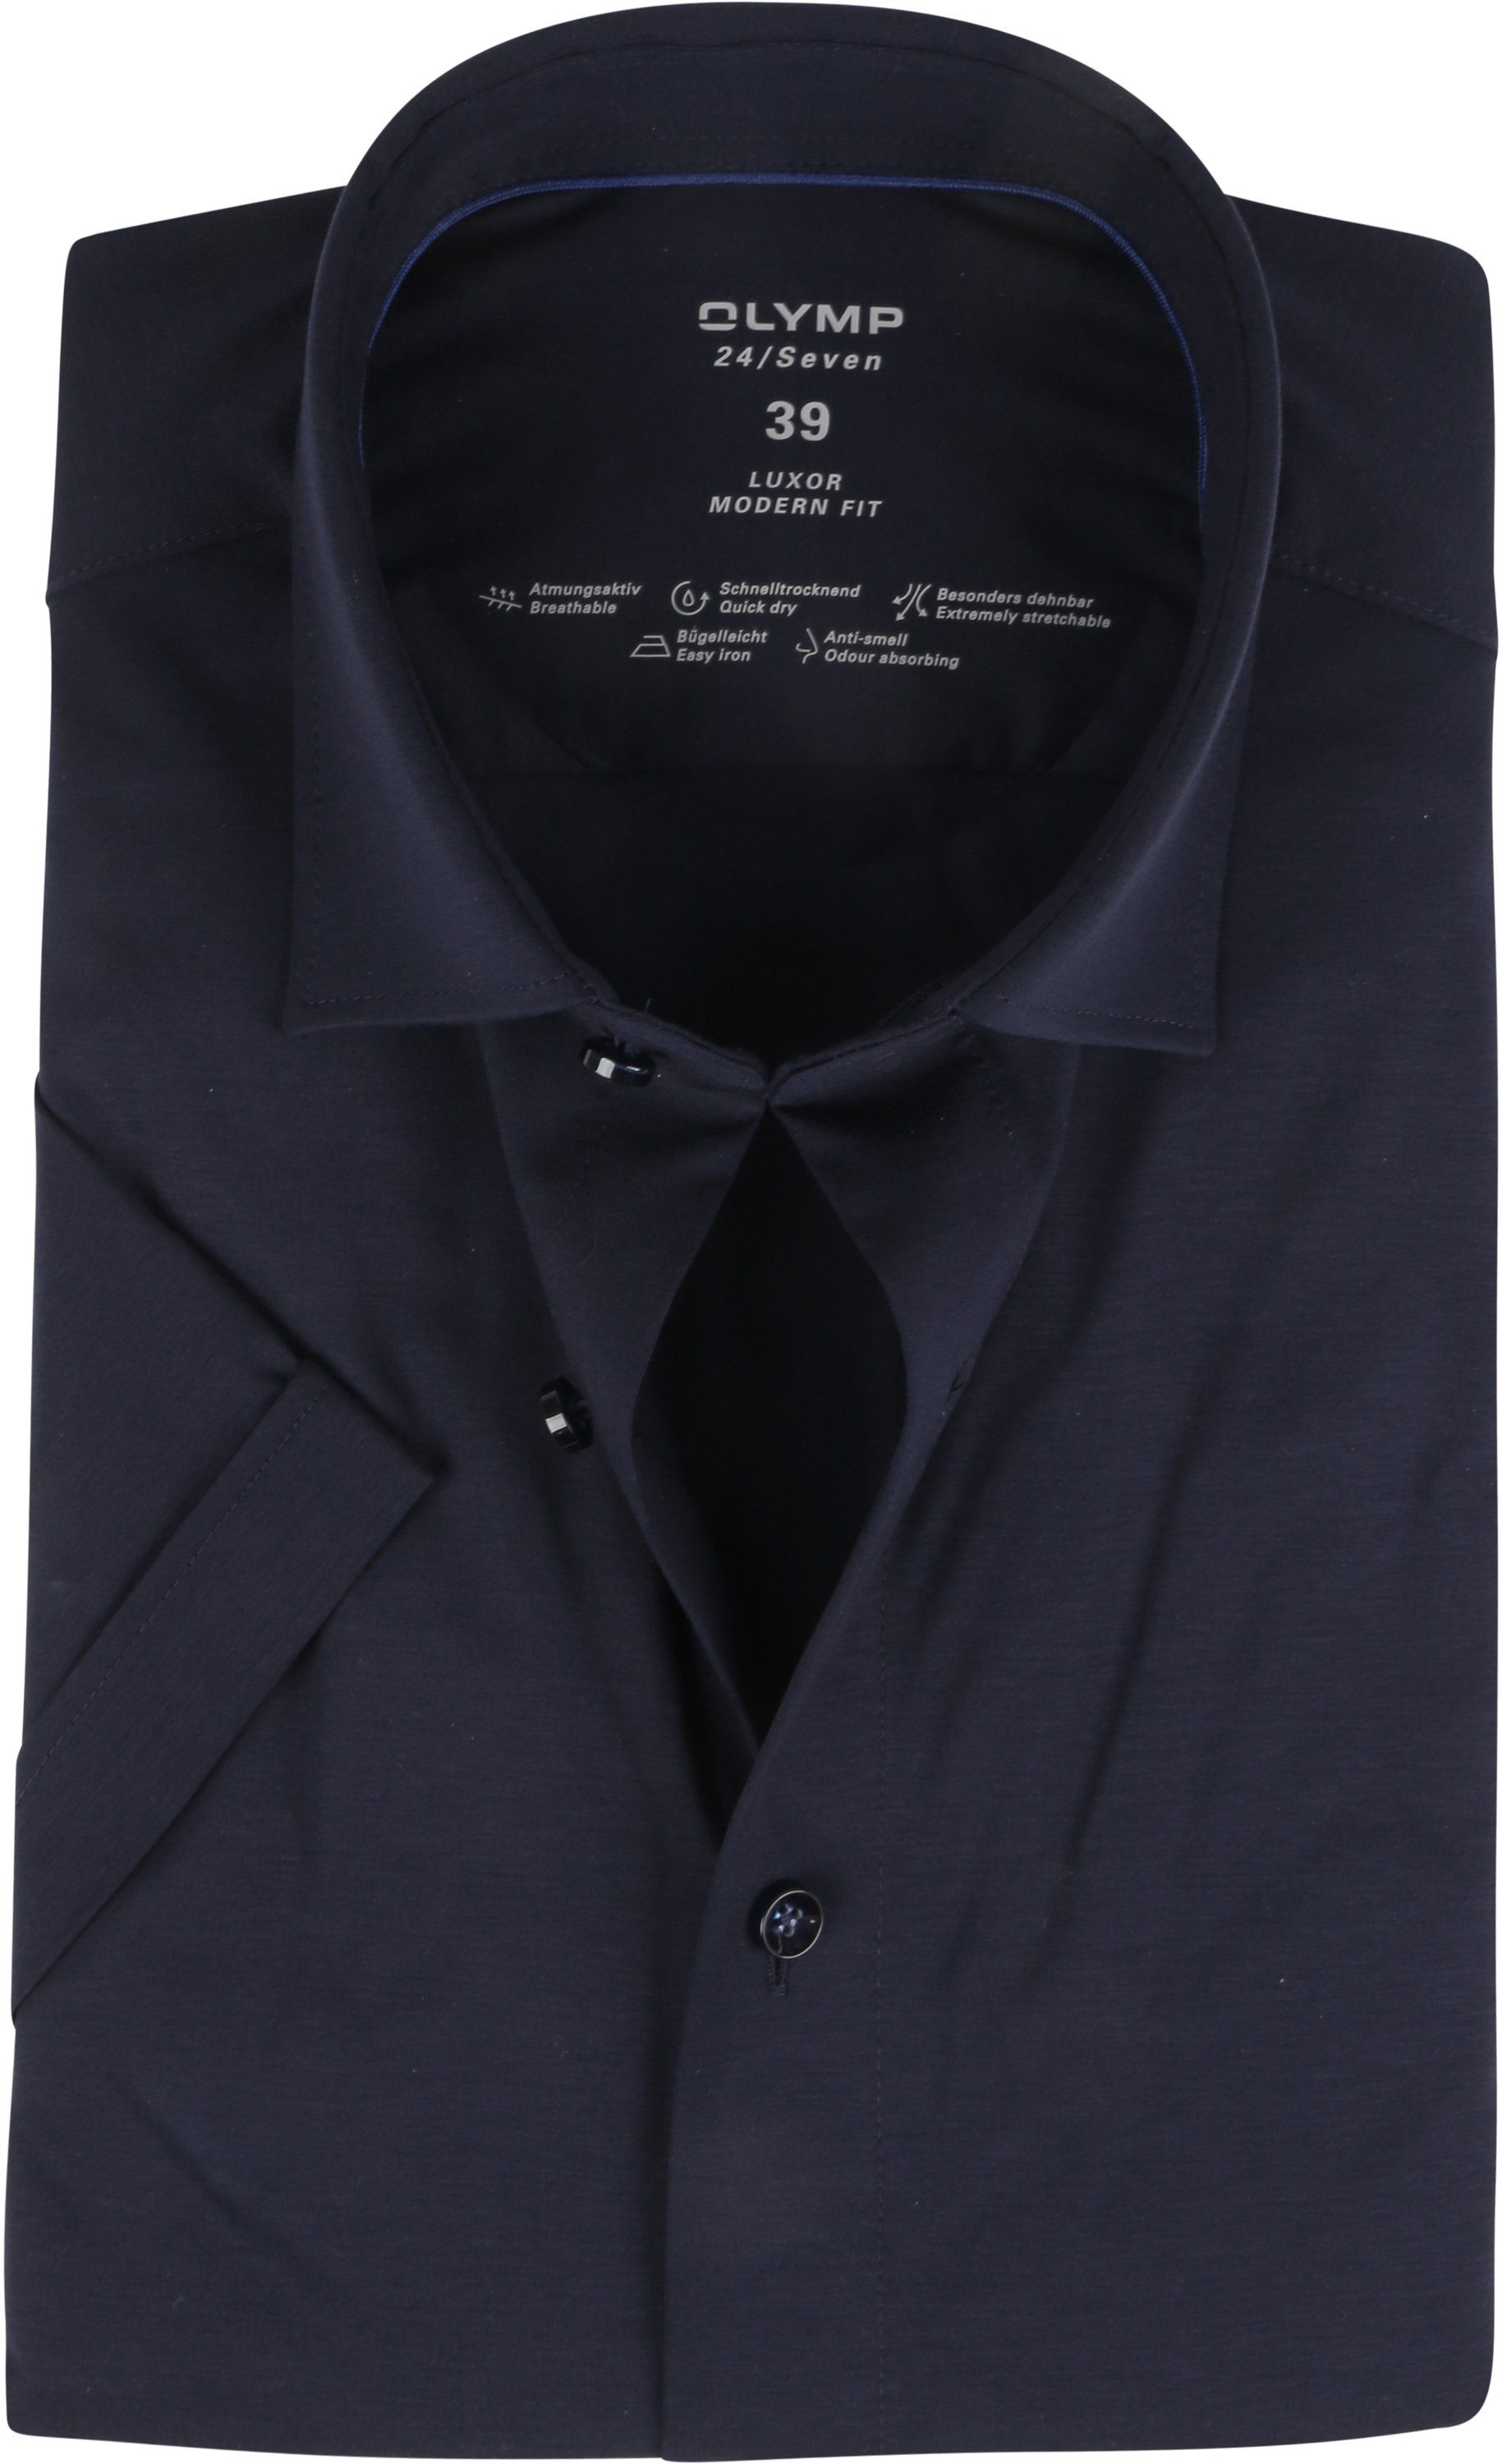 OLYMP Luxor Jersey Shirt 24/Seven Dark Blue Dark Blue size 15